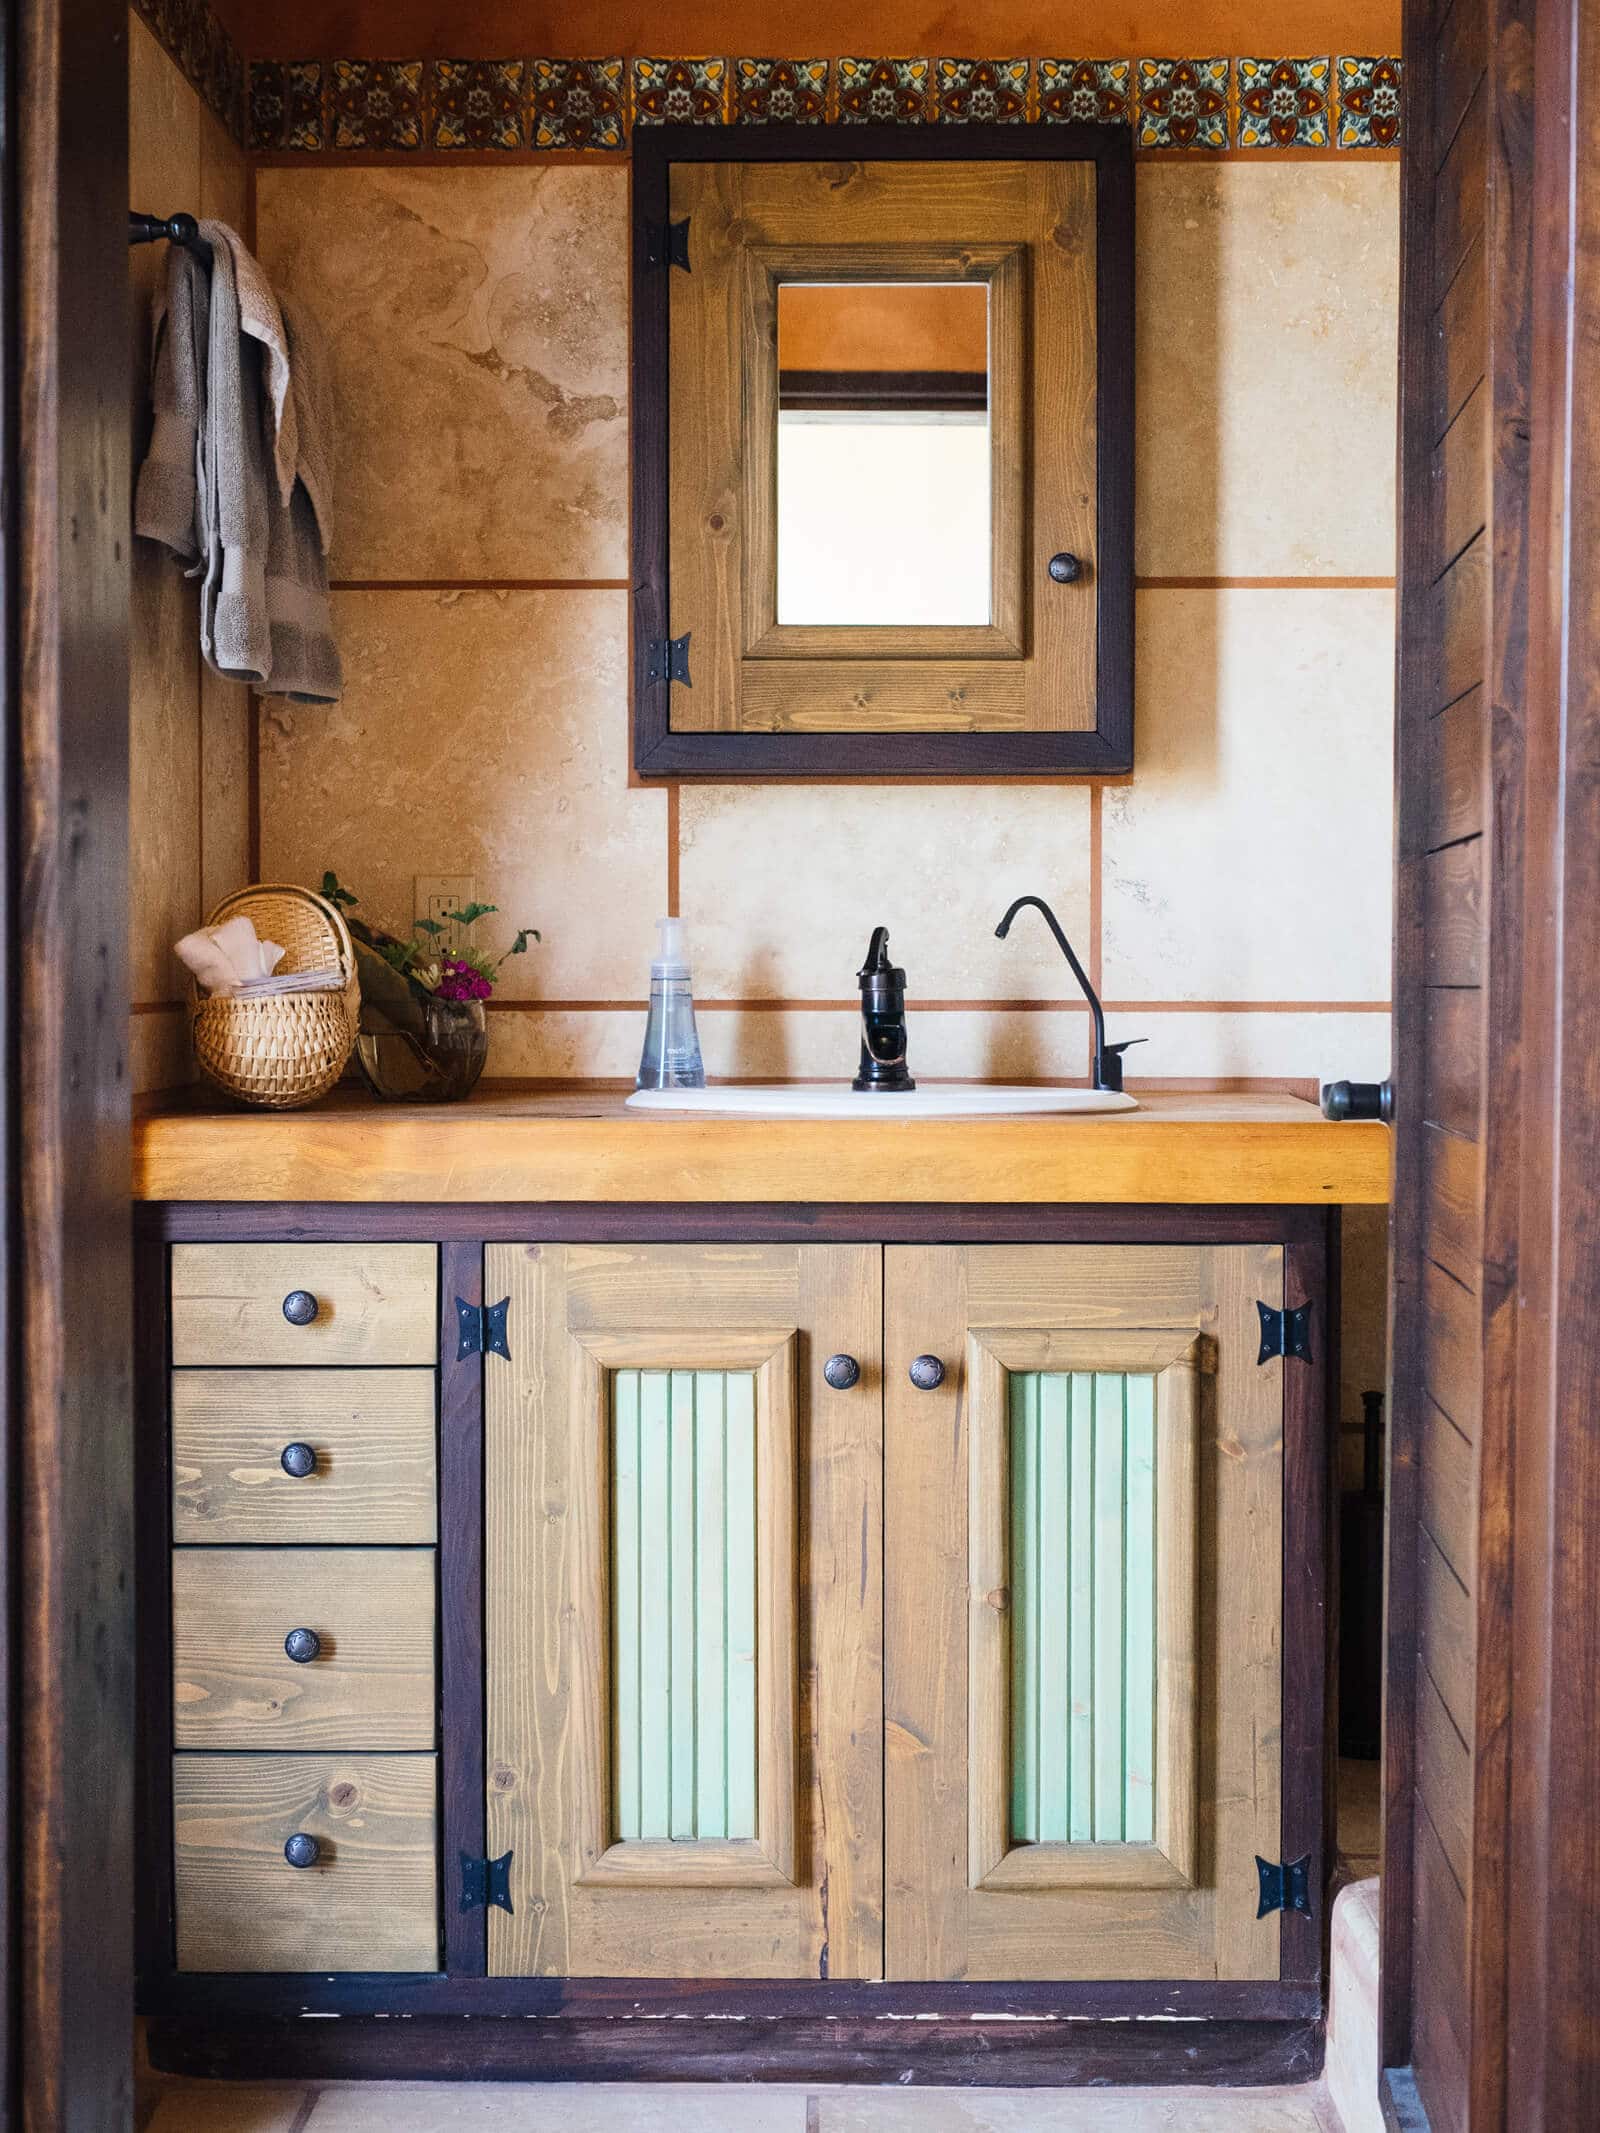 A rustic, handcrafted bathroom in an Earthsip